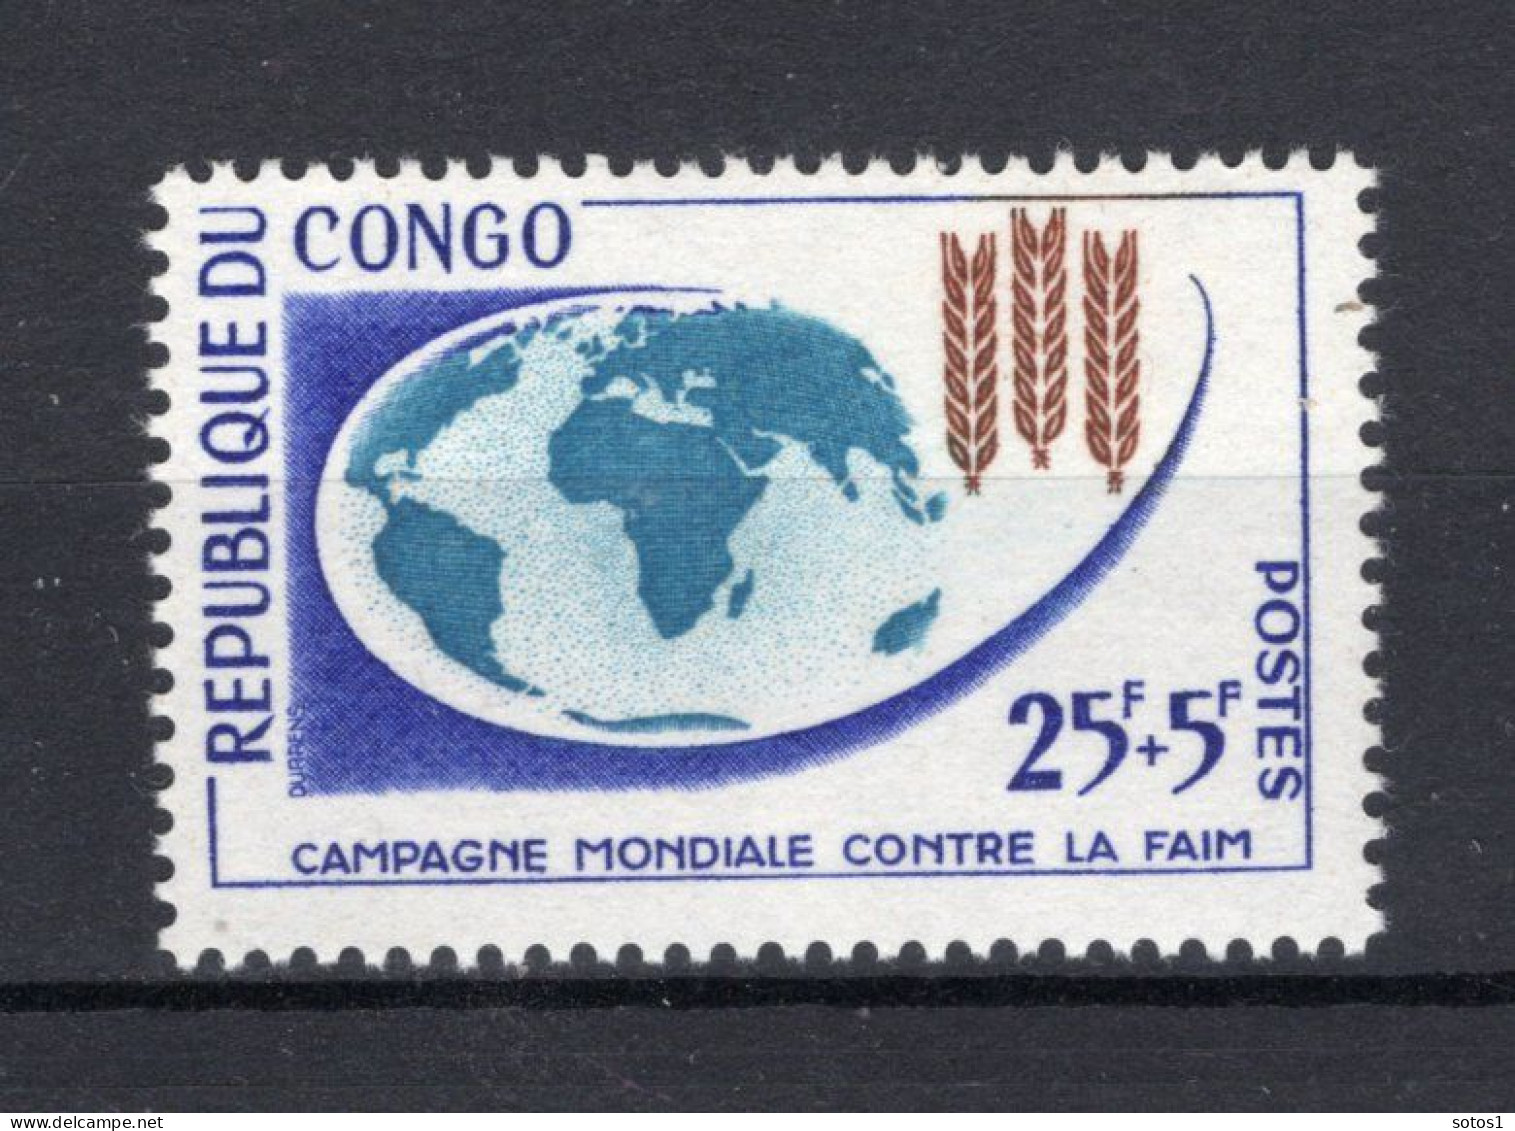 TANZANIA Yt 262A/262D MNH 1985 - Tanzanie (1964-...)